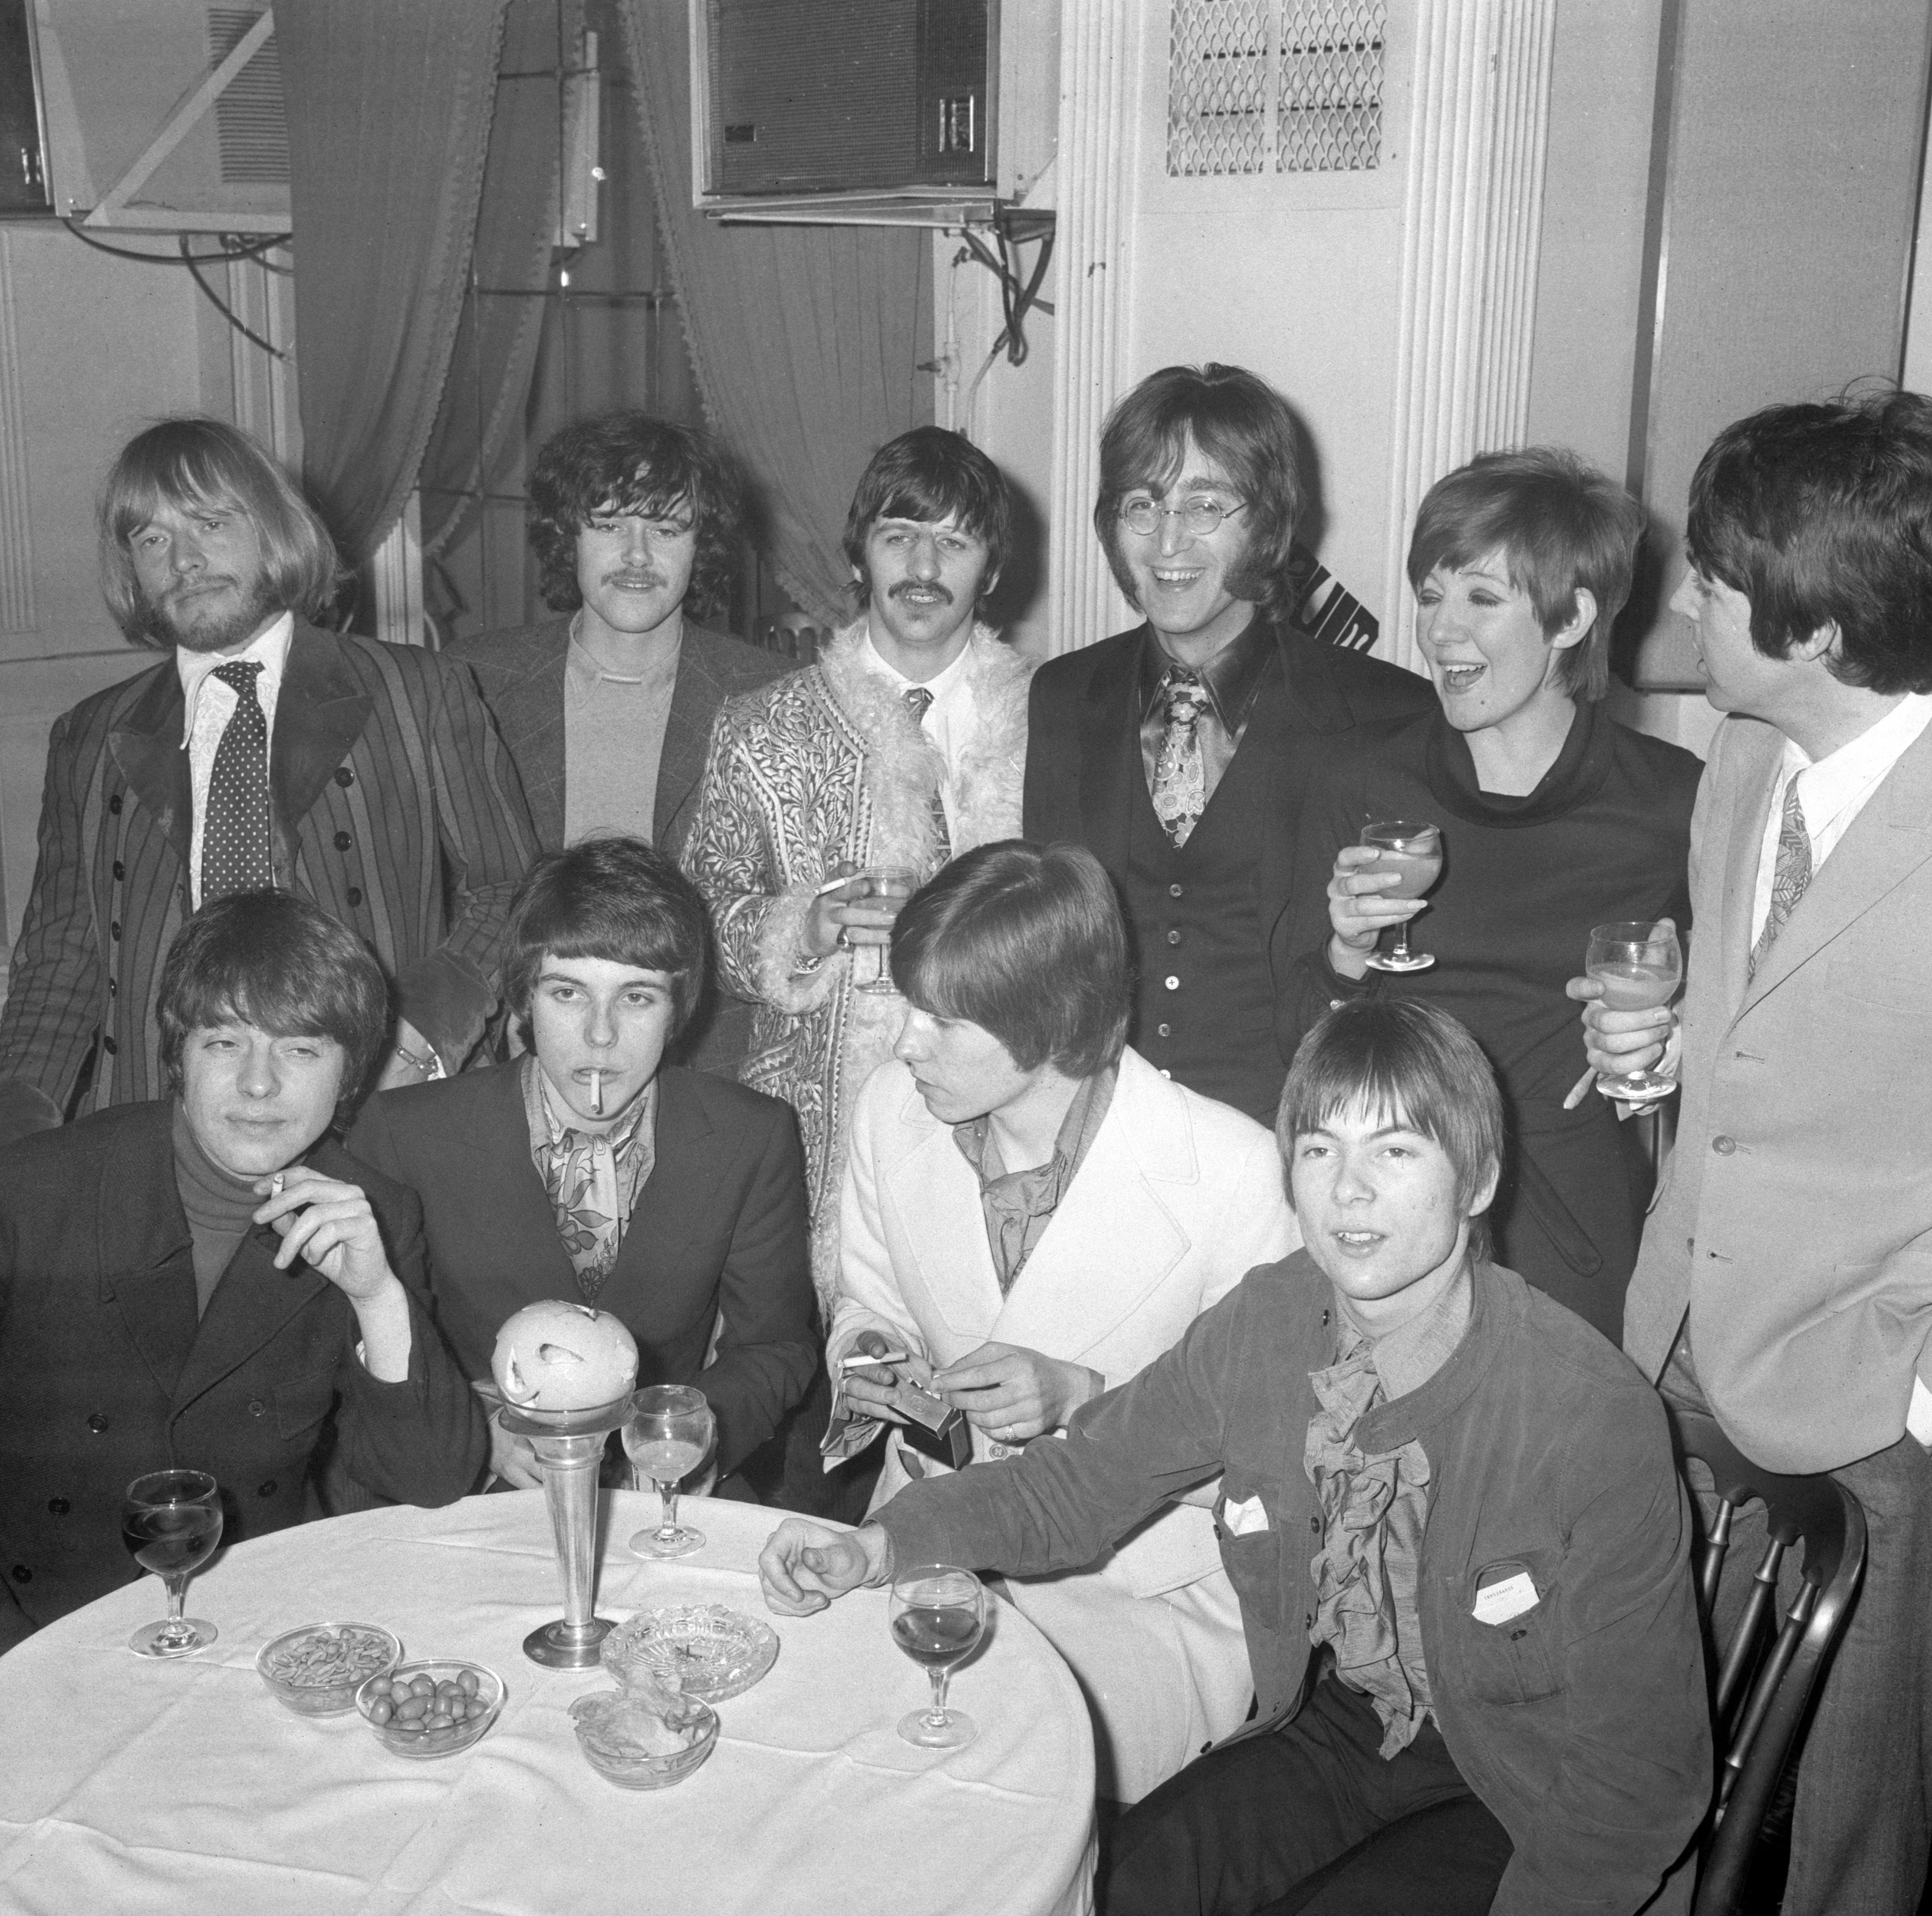 Os Beatles e os Rolling Stones, em Londres, 1968 (Foto: Getty Images)